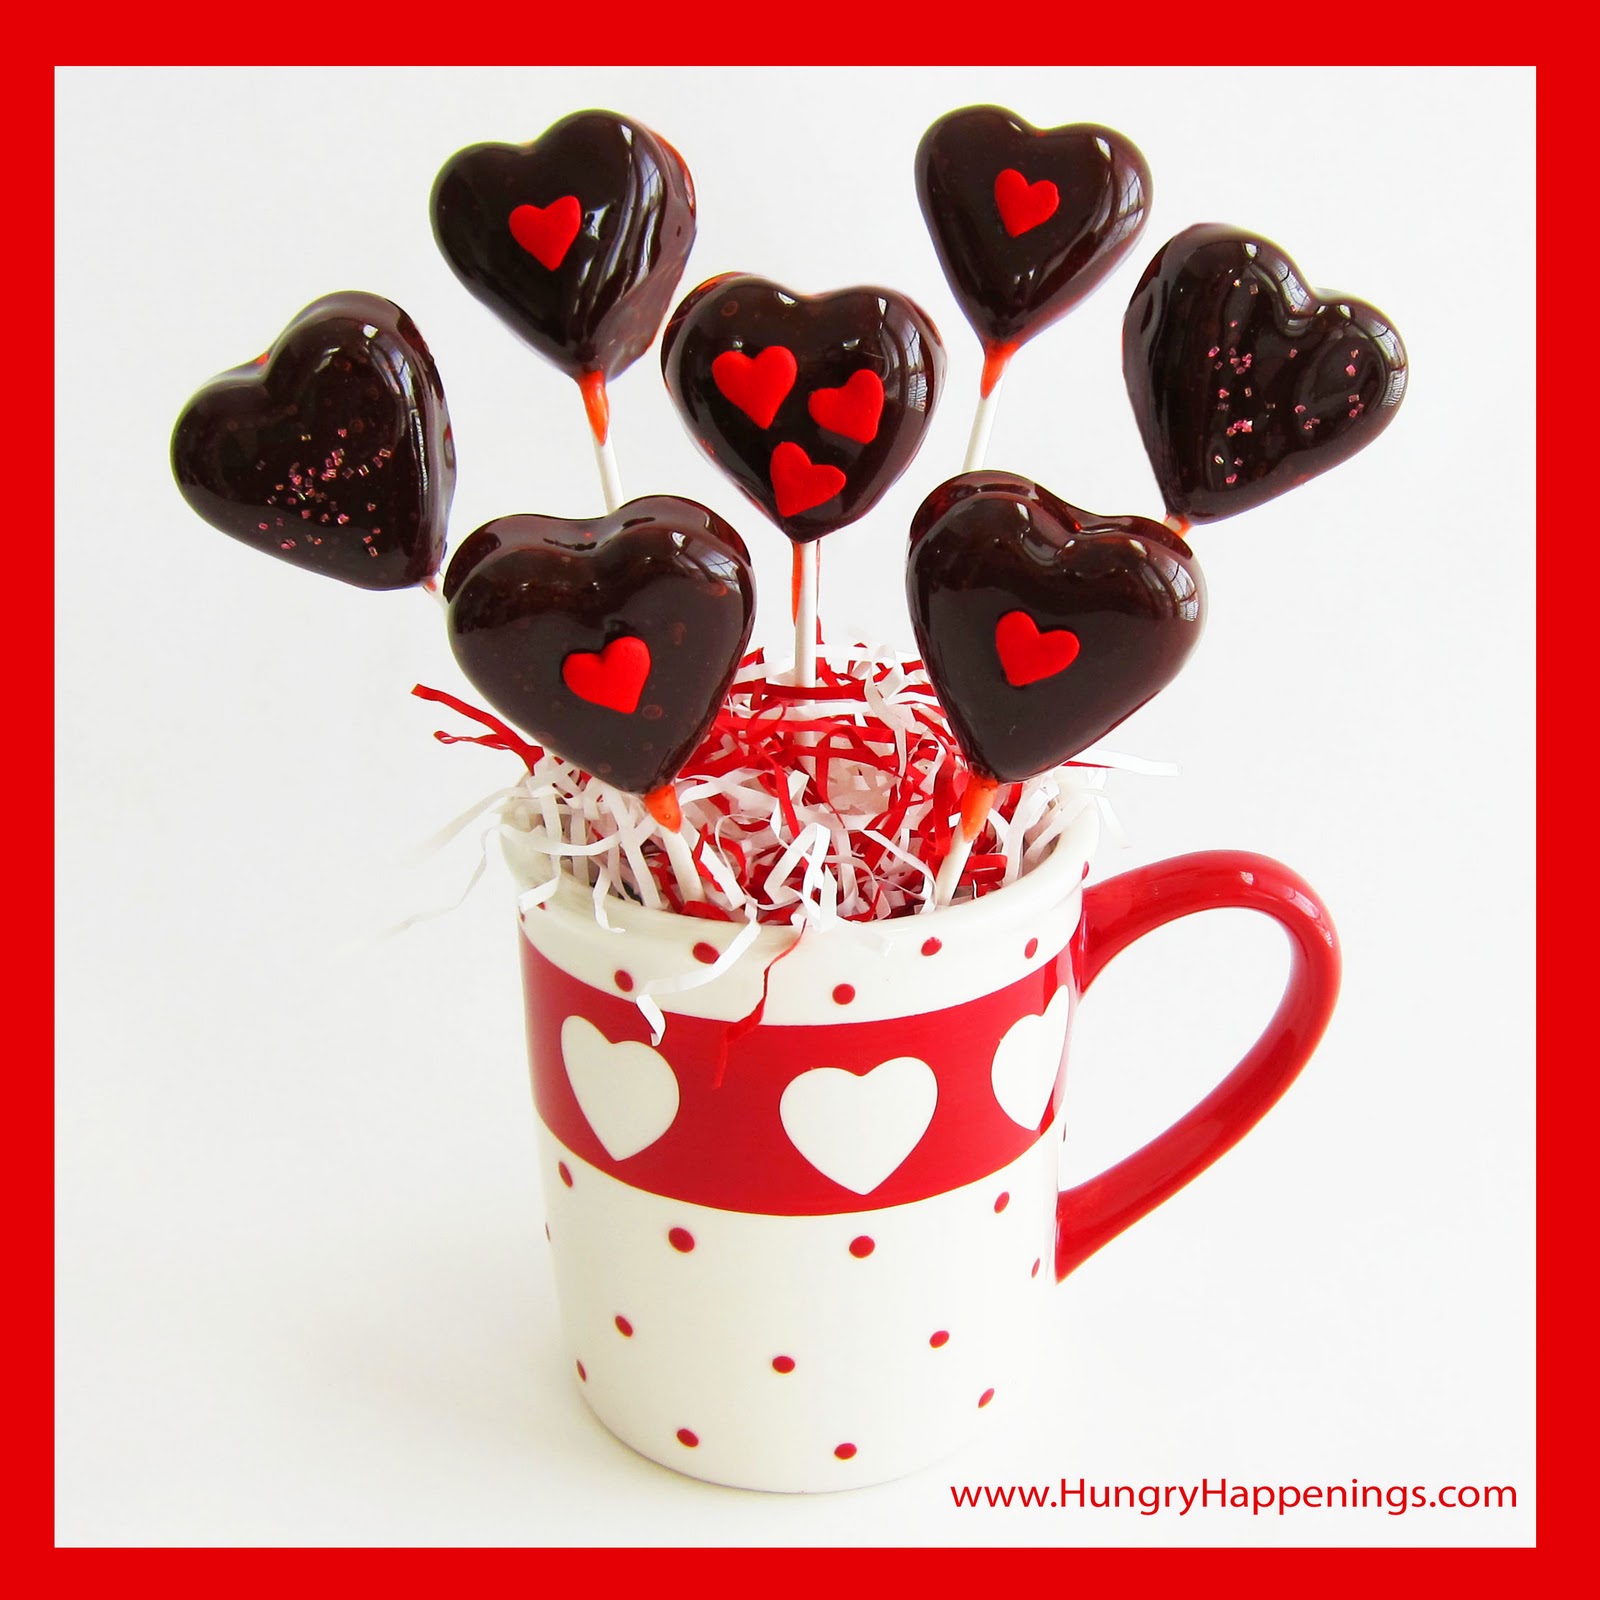 KITCHENCRAFT Hearts Lollipop Chocolate Moulds Love/Kids/Parties/Valentines 